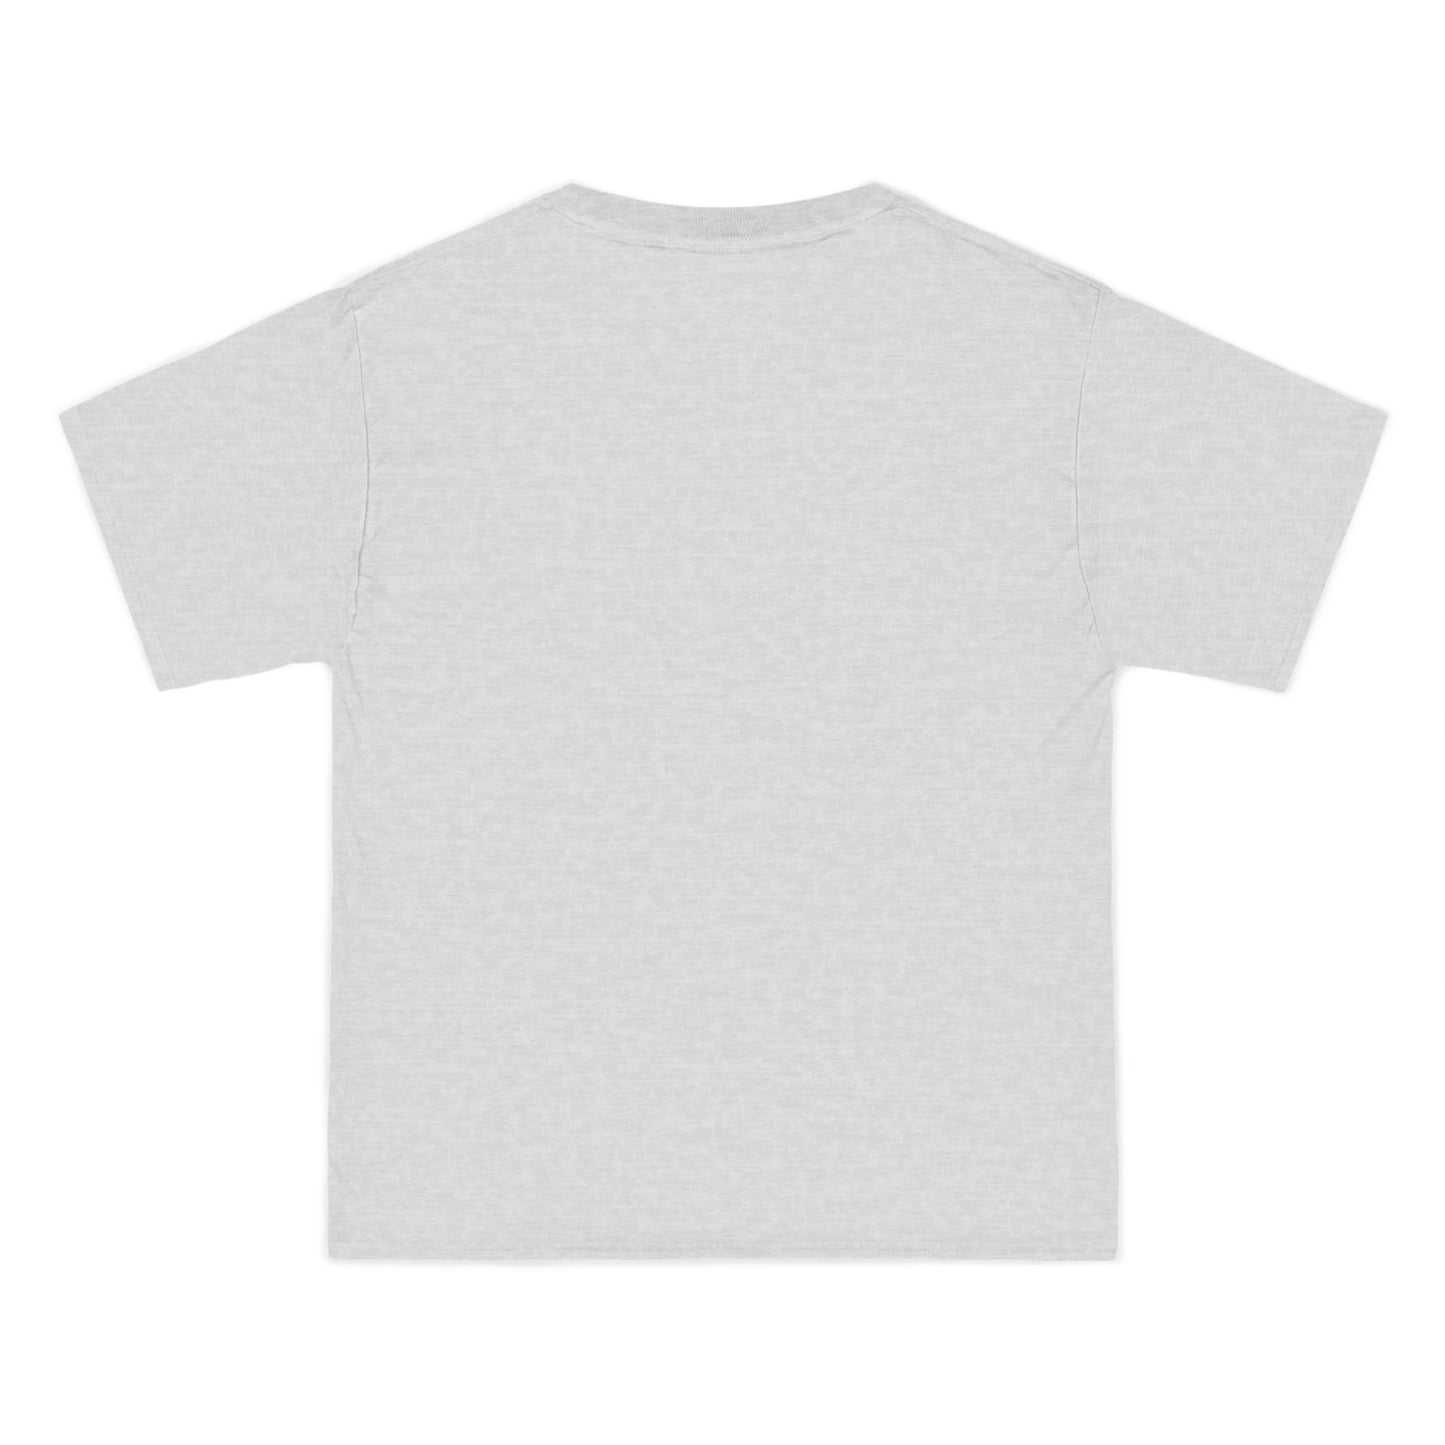 Hola Beefy-T®  Short-Sleeve T-Shirt